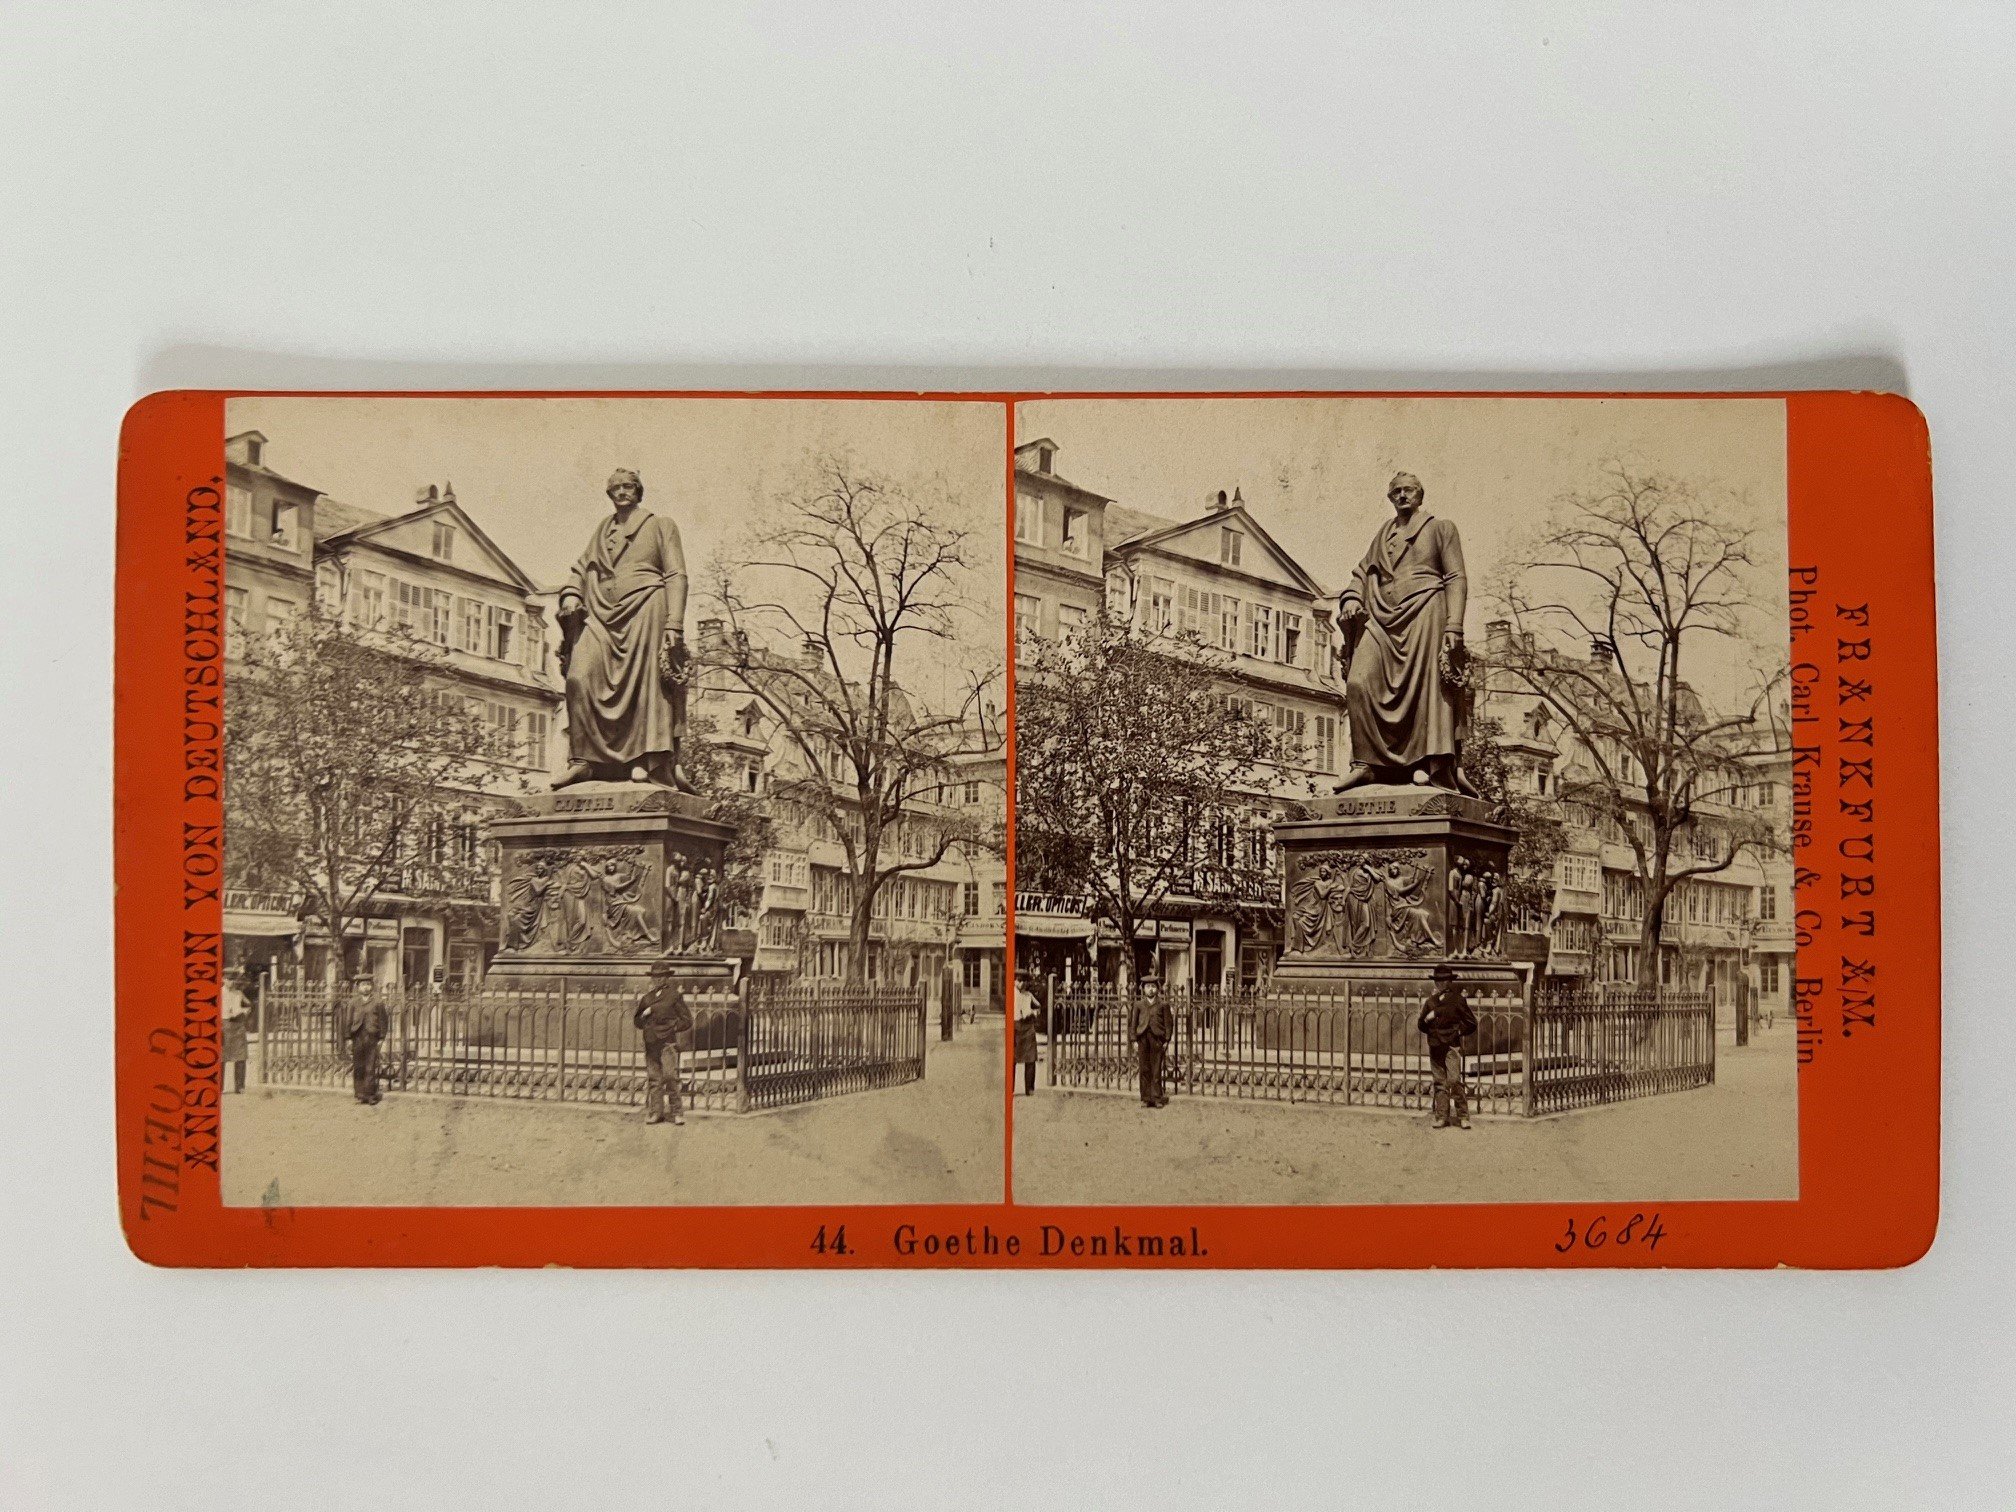 Stereobild, Carl Krause, Frankfurt, Nr. 44, Goethe-Denkmal, ca. 1880. (Taunus-Rhein-Main - Regionalgeschichtliche Sammlung Dr. Stefan Naas CC BY-NC-SA)